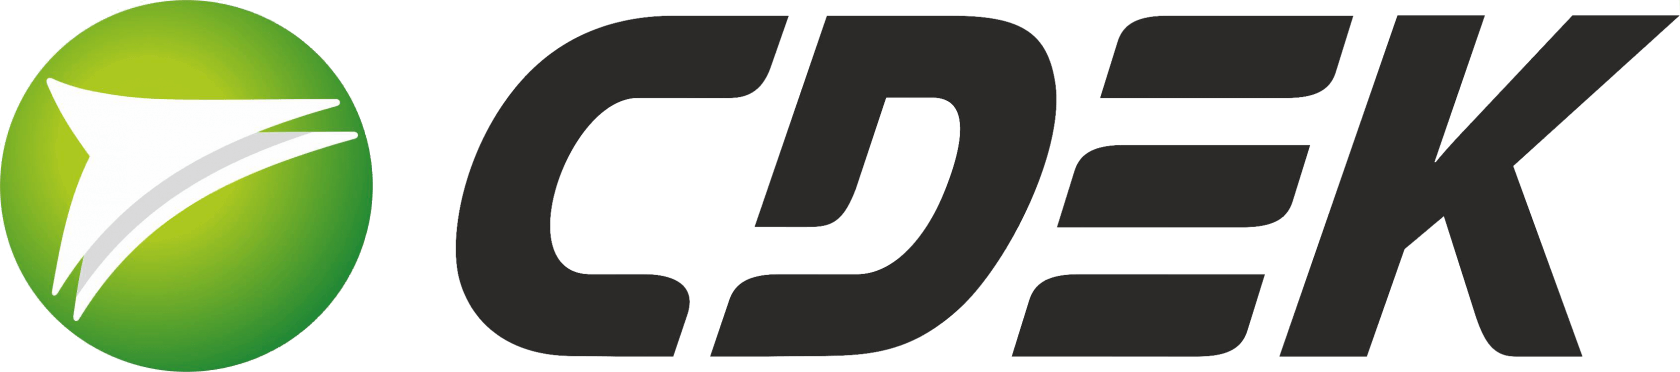 Логотип ТК